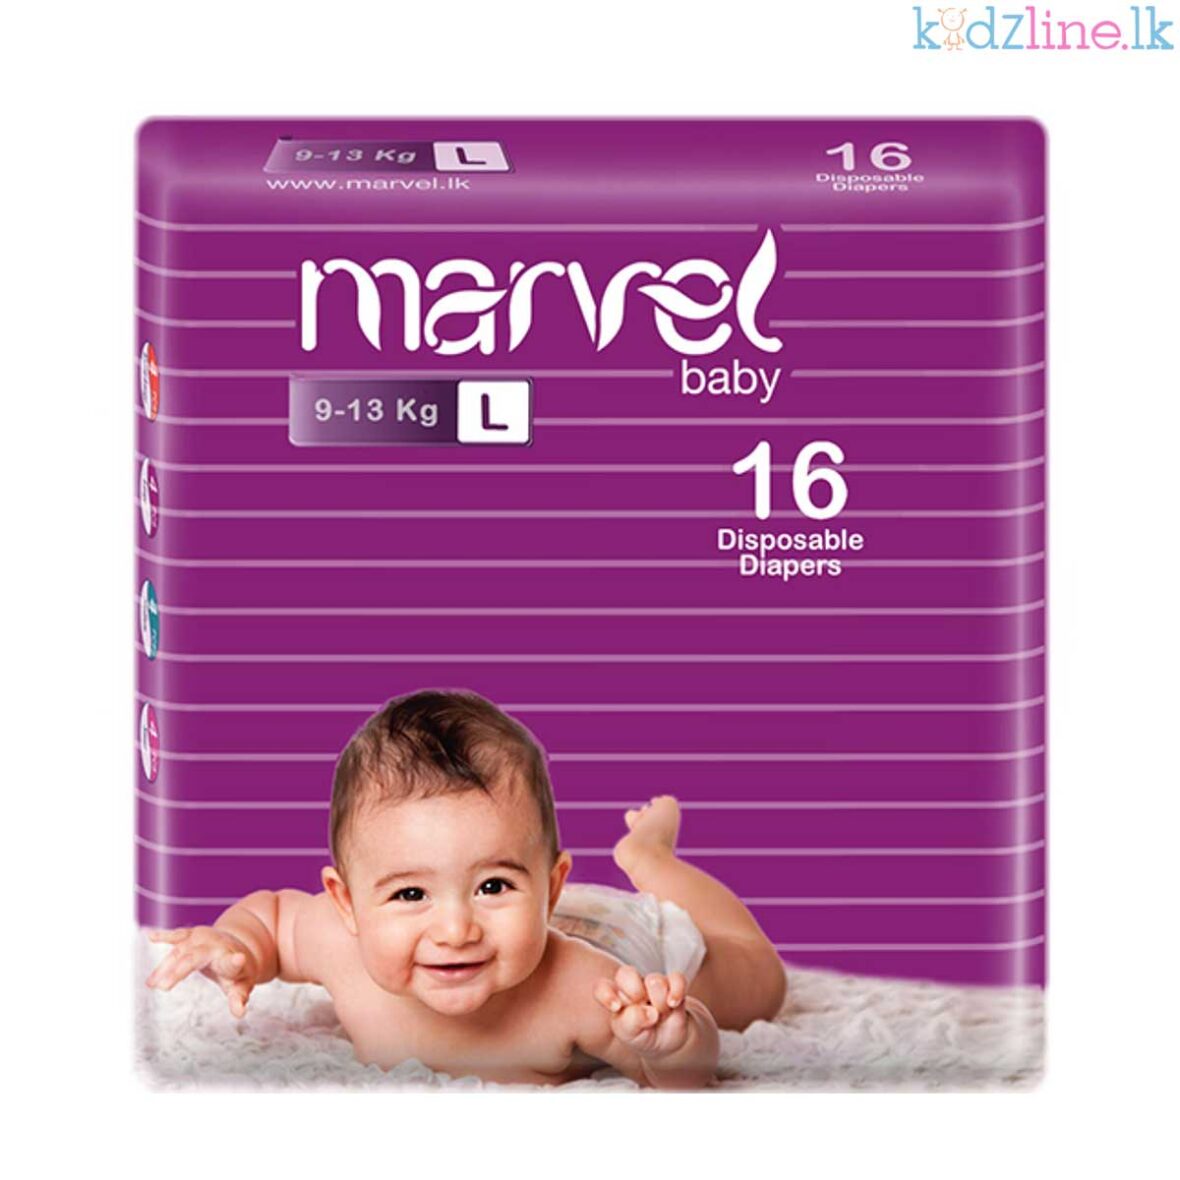 Marvel Baby Diaper Large 16Pcs